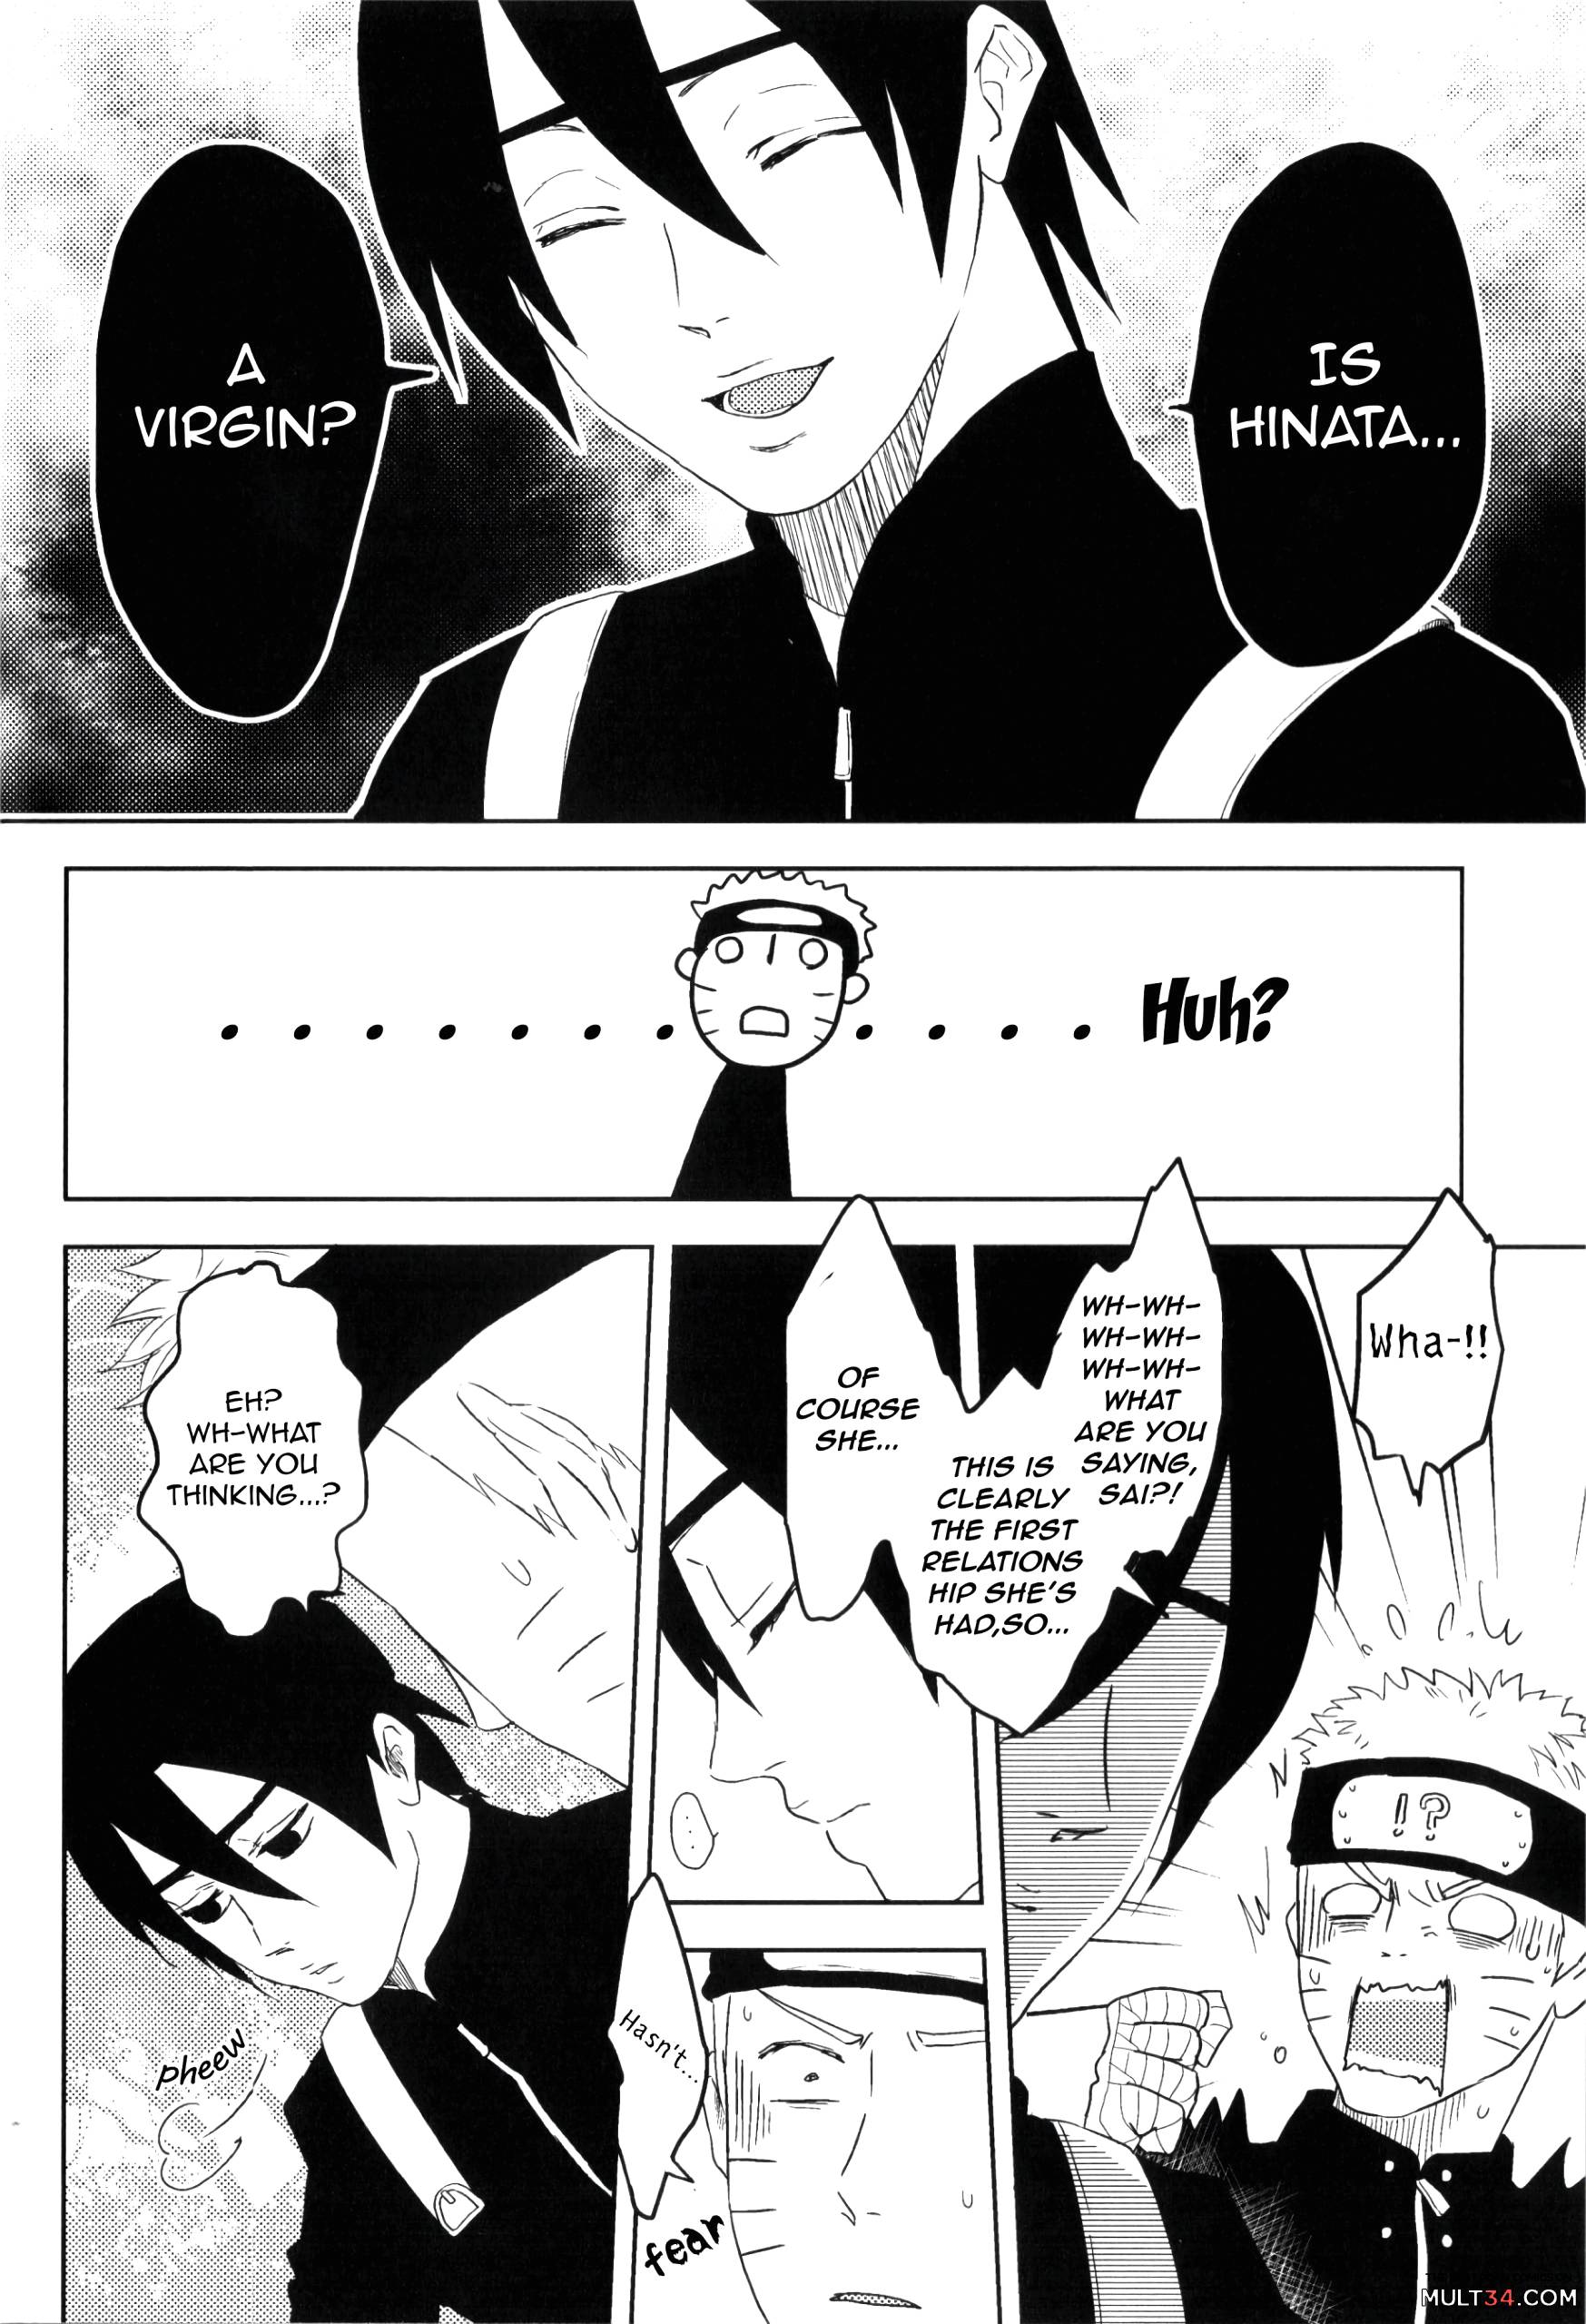 Junketsu Patience page 5